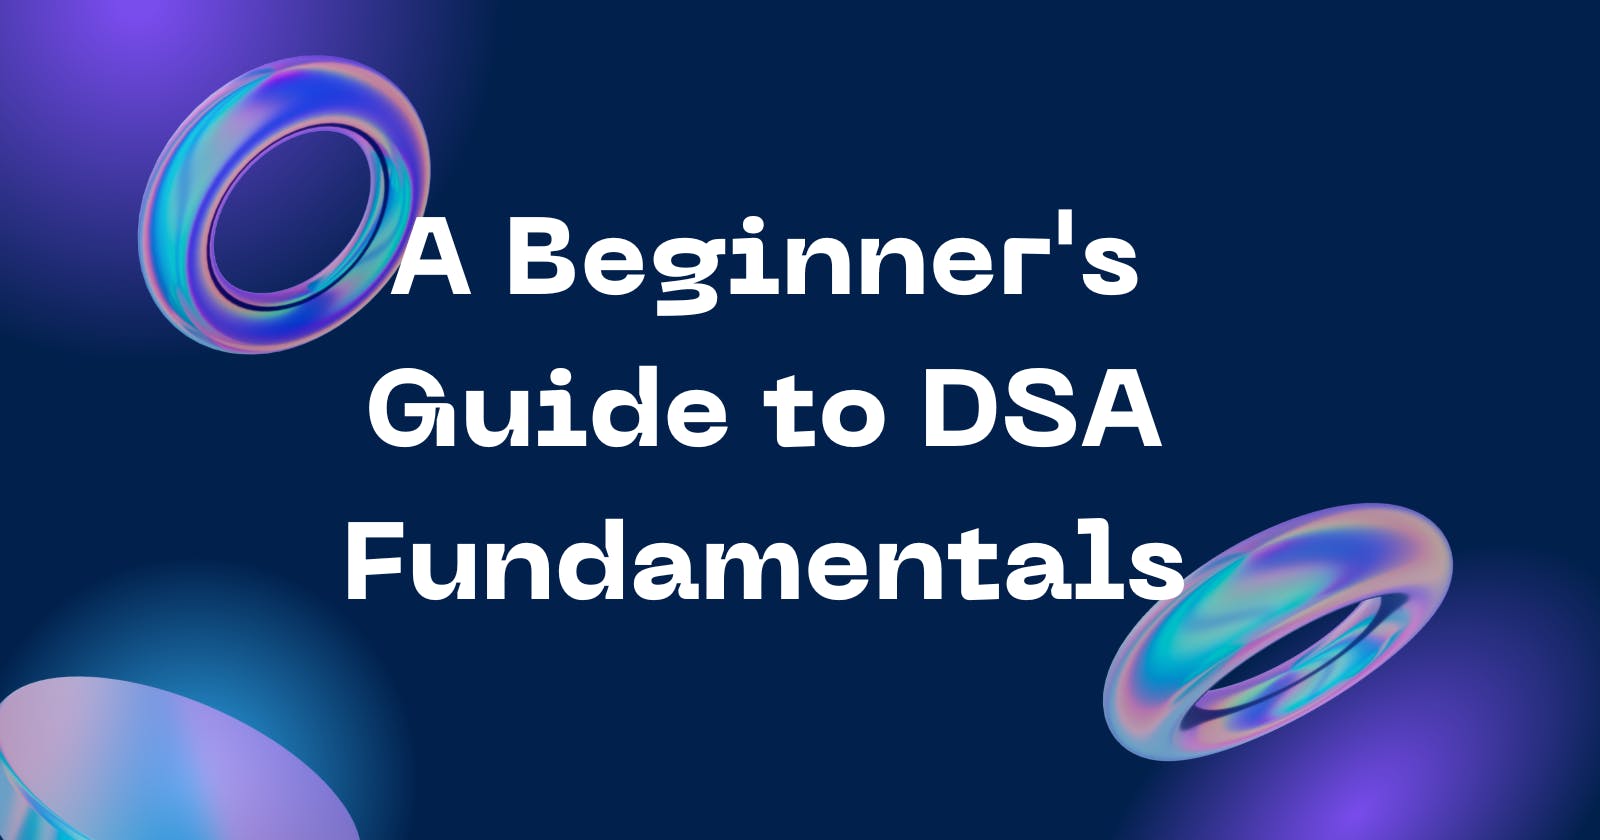 A Beginner's Guide to DSA Fundamentals